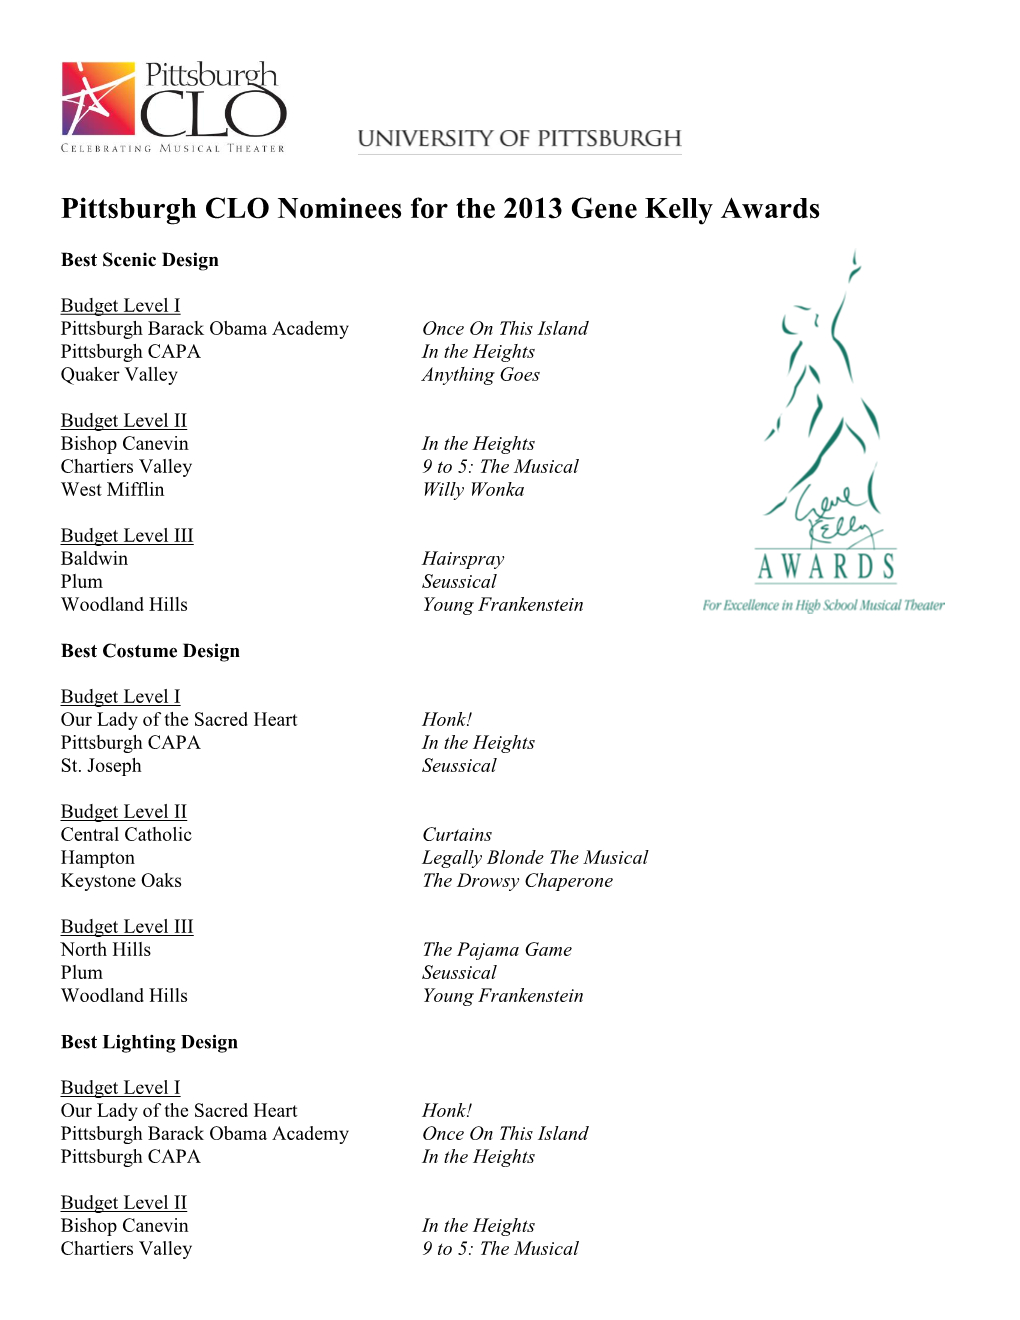 Gene Kelly Award Nominees!